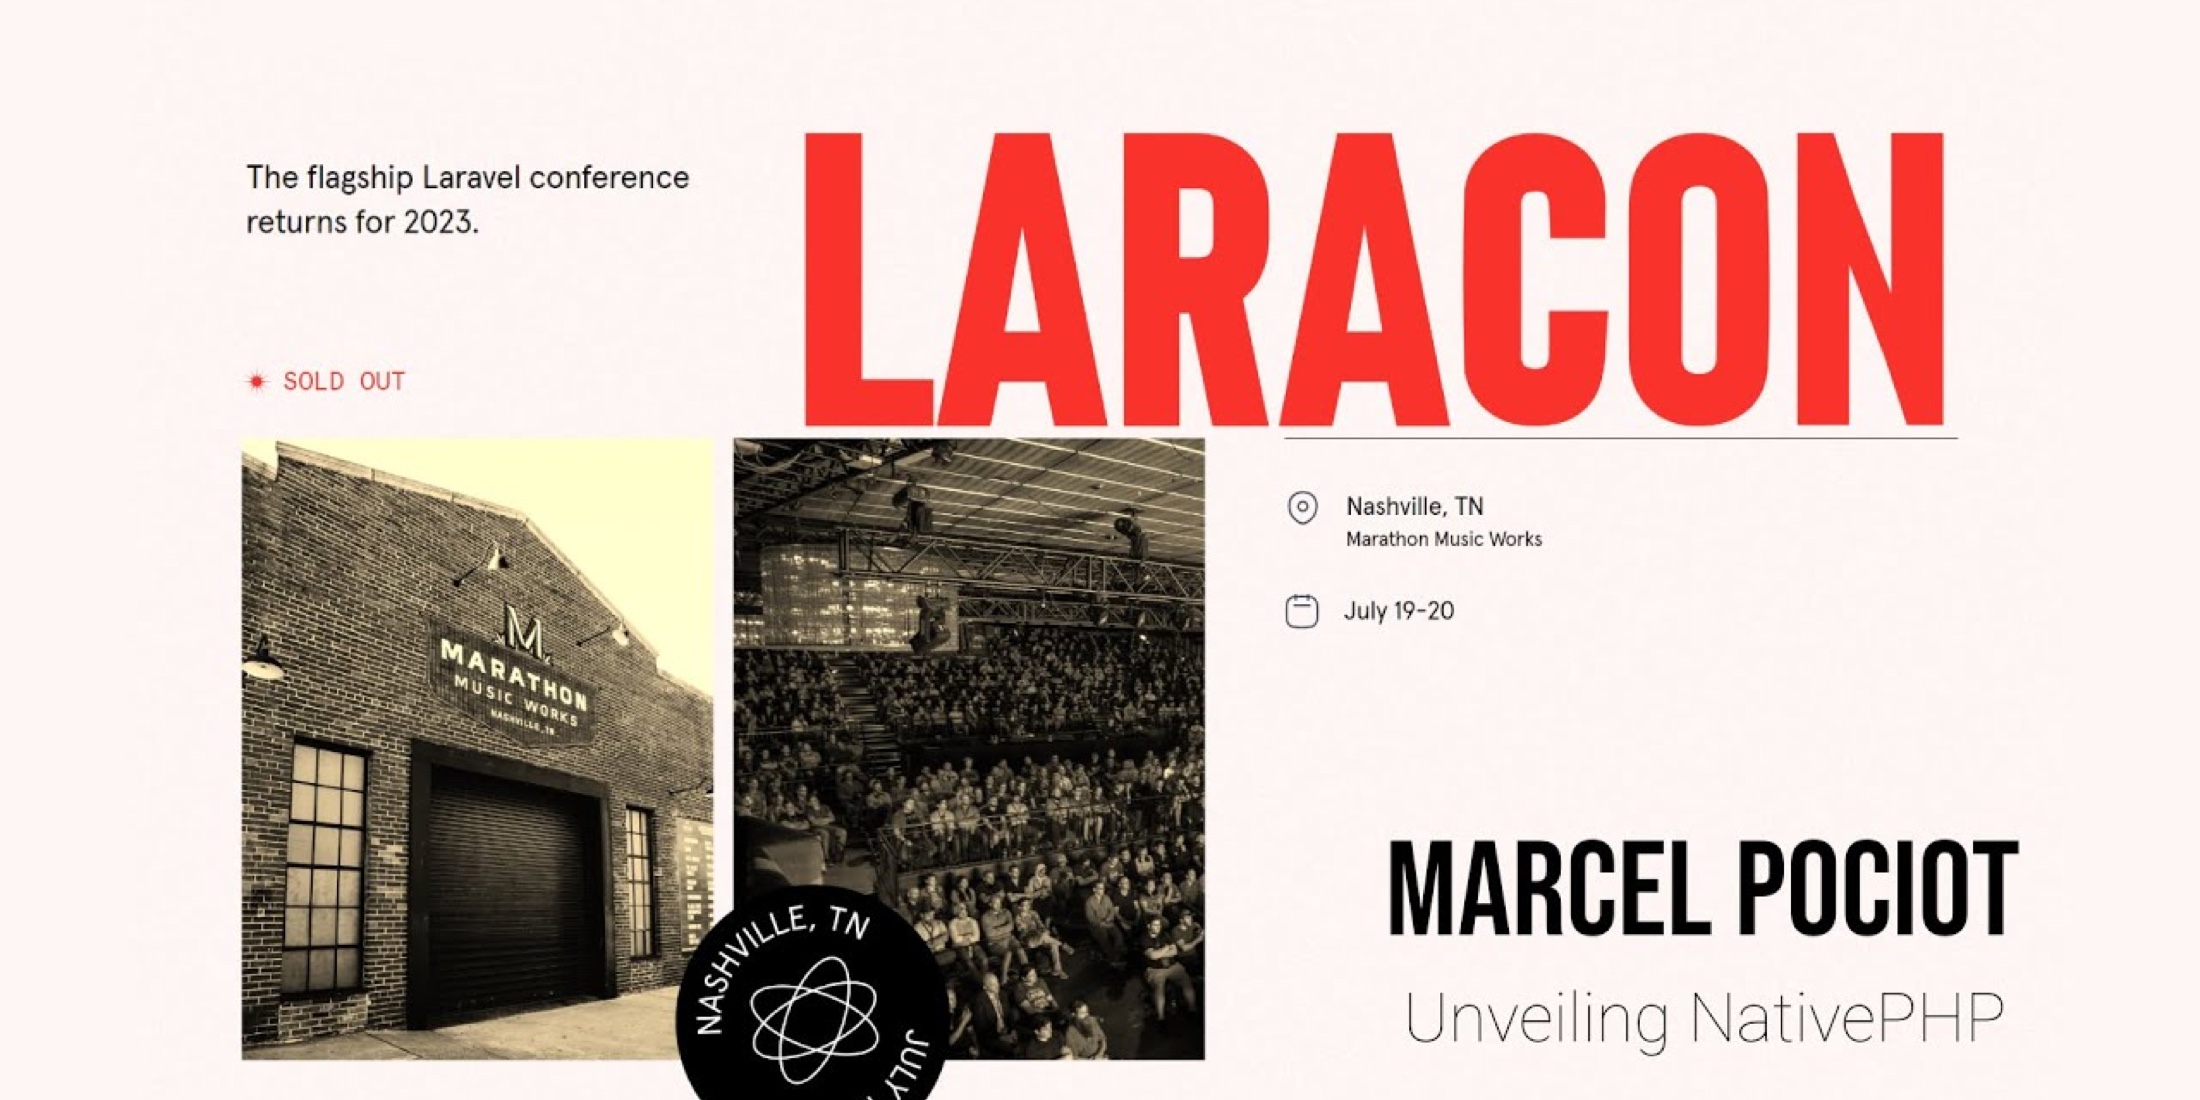 Watch Marcel Pociot's "NativePHP" Presentation from Laracon image